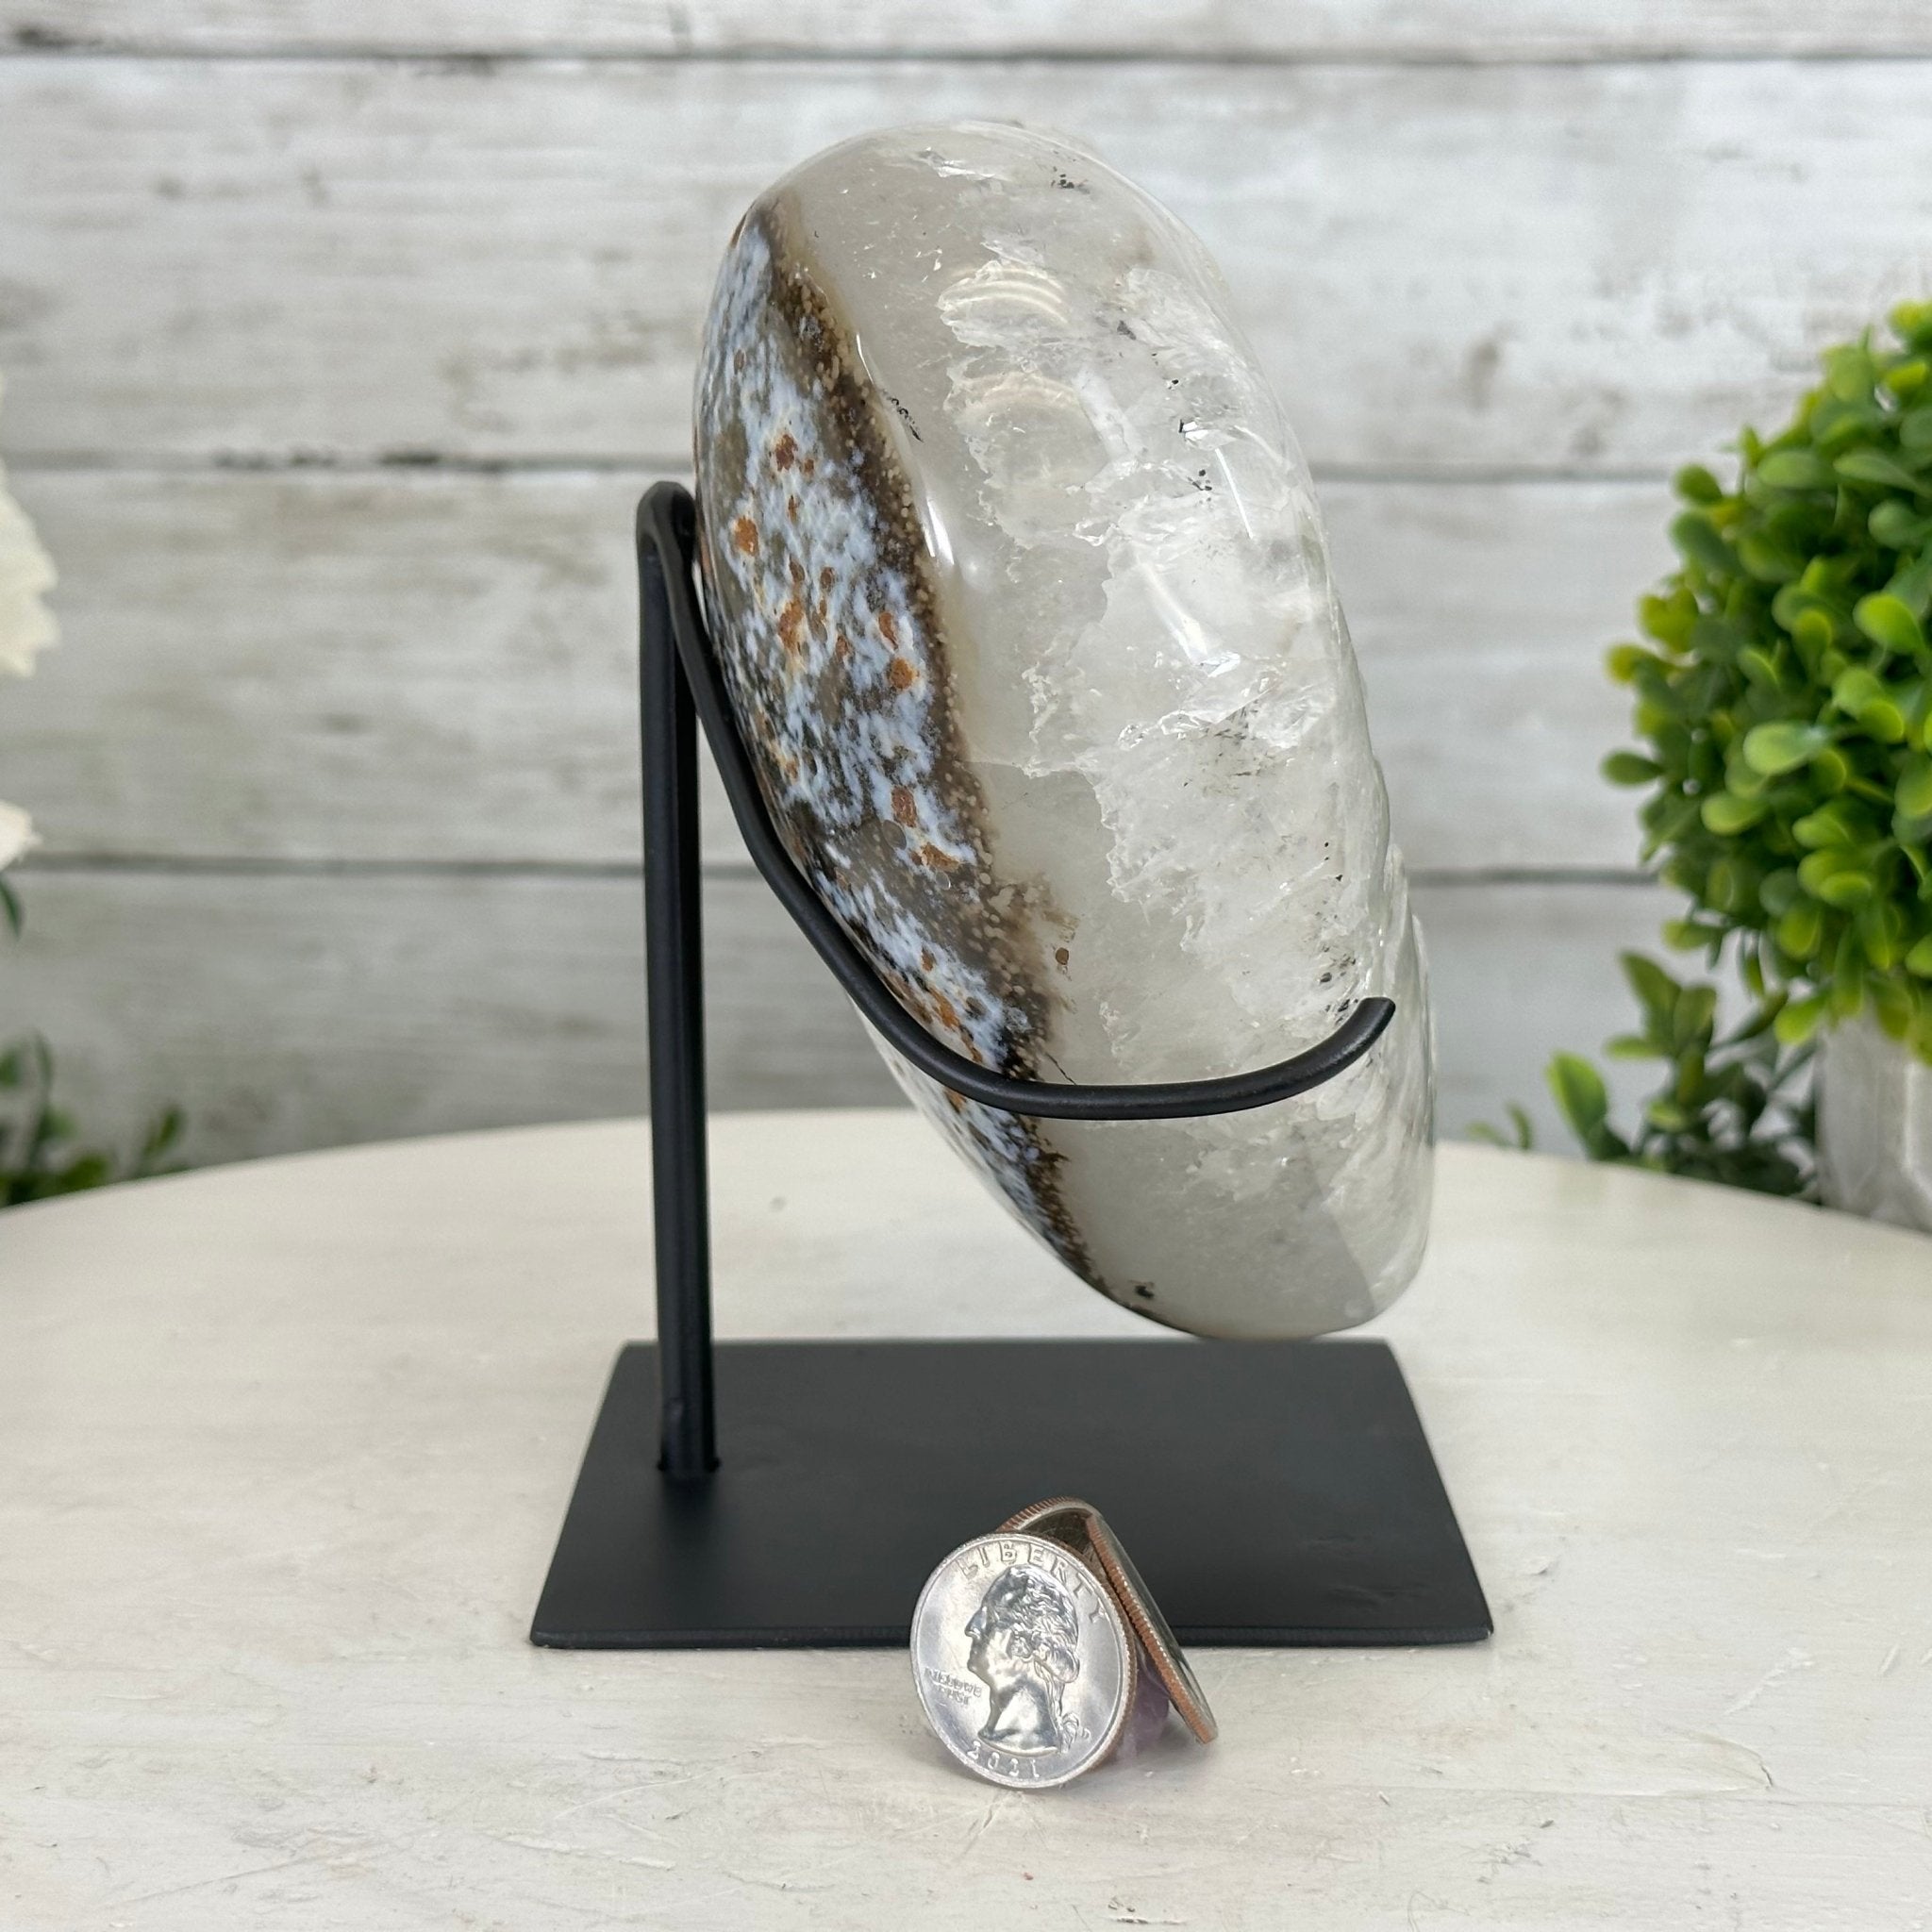 Polished Agate Heart Geode on a Metal Stand, 4.7 lbs & 6.5" Tall, Model #5468-0066 by Brazil Gems - Brazil GemsBrazil GemsPolished Agate Heart Geode on a Metal Stand, 4.7 lbs & 6.5" Tall, Model #5468-0066 by Brazil GemsHearts5468-0066